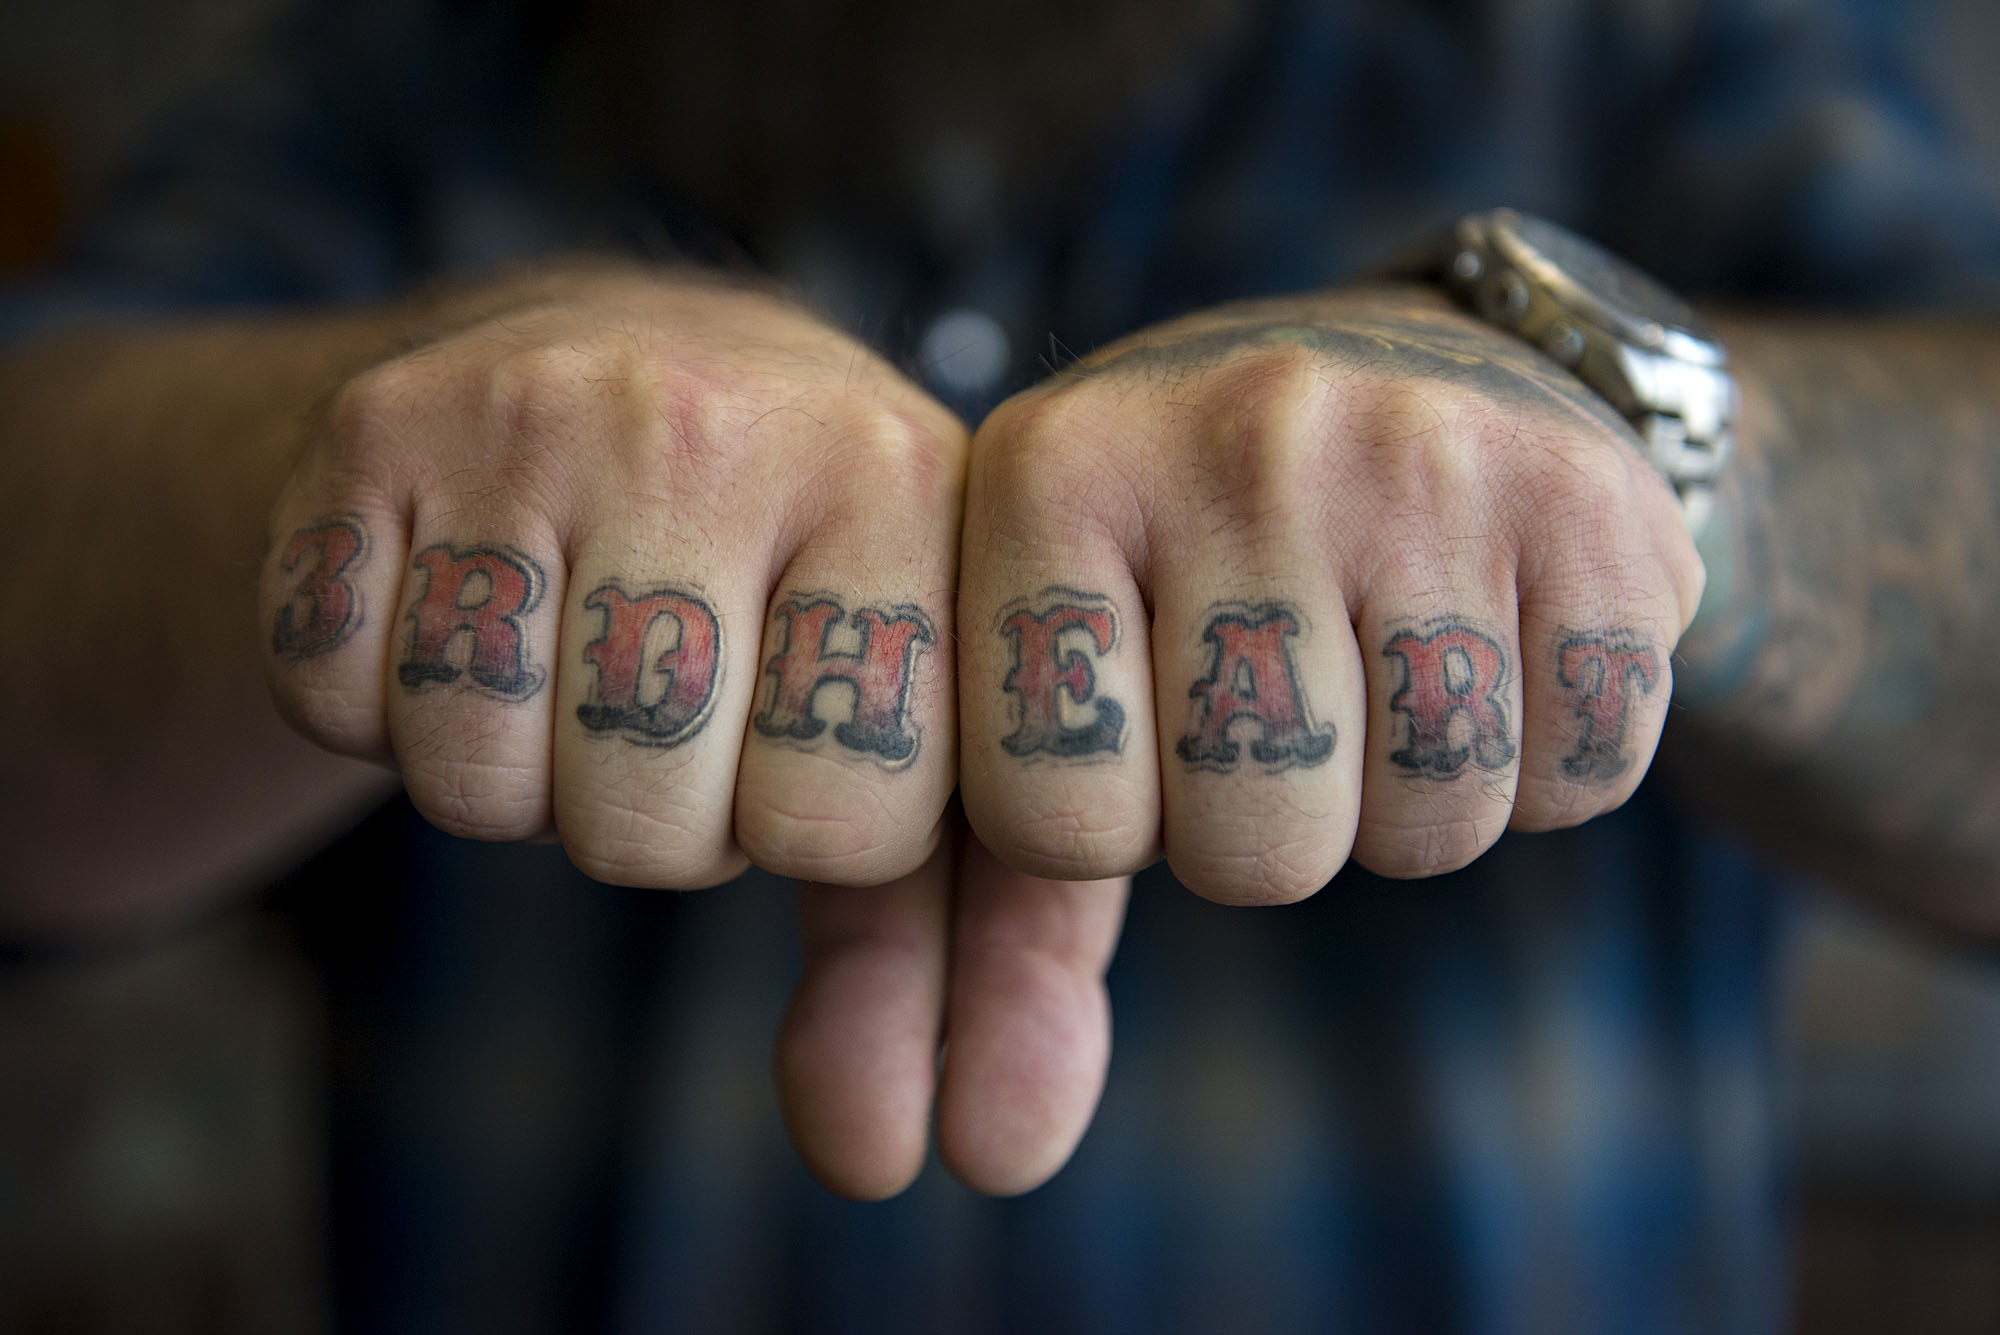 Tattoo artist Ryan "Boomer" Boomhower displays tattoos on his knuckles Tuesday afternoon, Oct. 6, 2015 in Washougal. (Amanda Cowan/The Columbian)